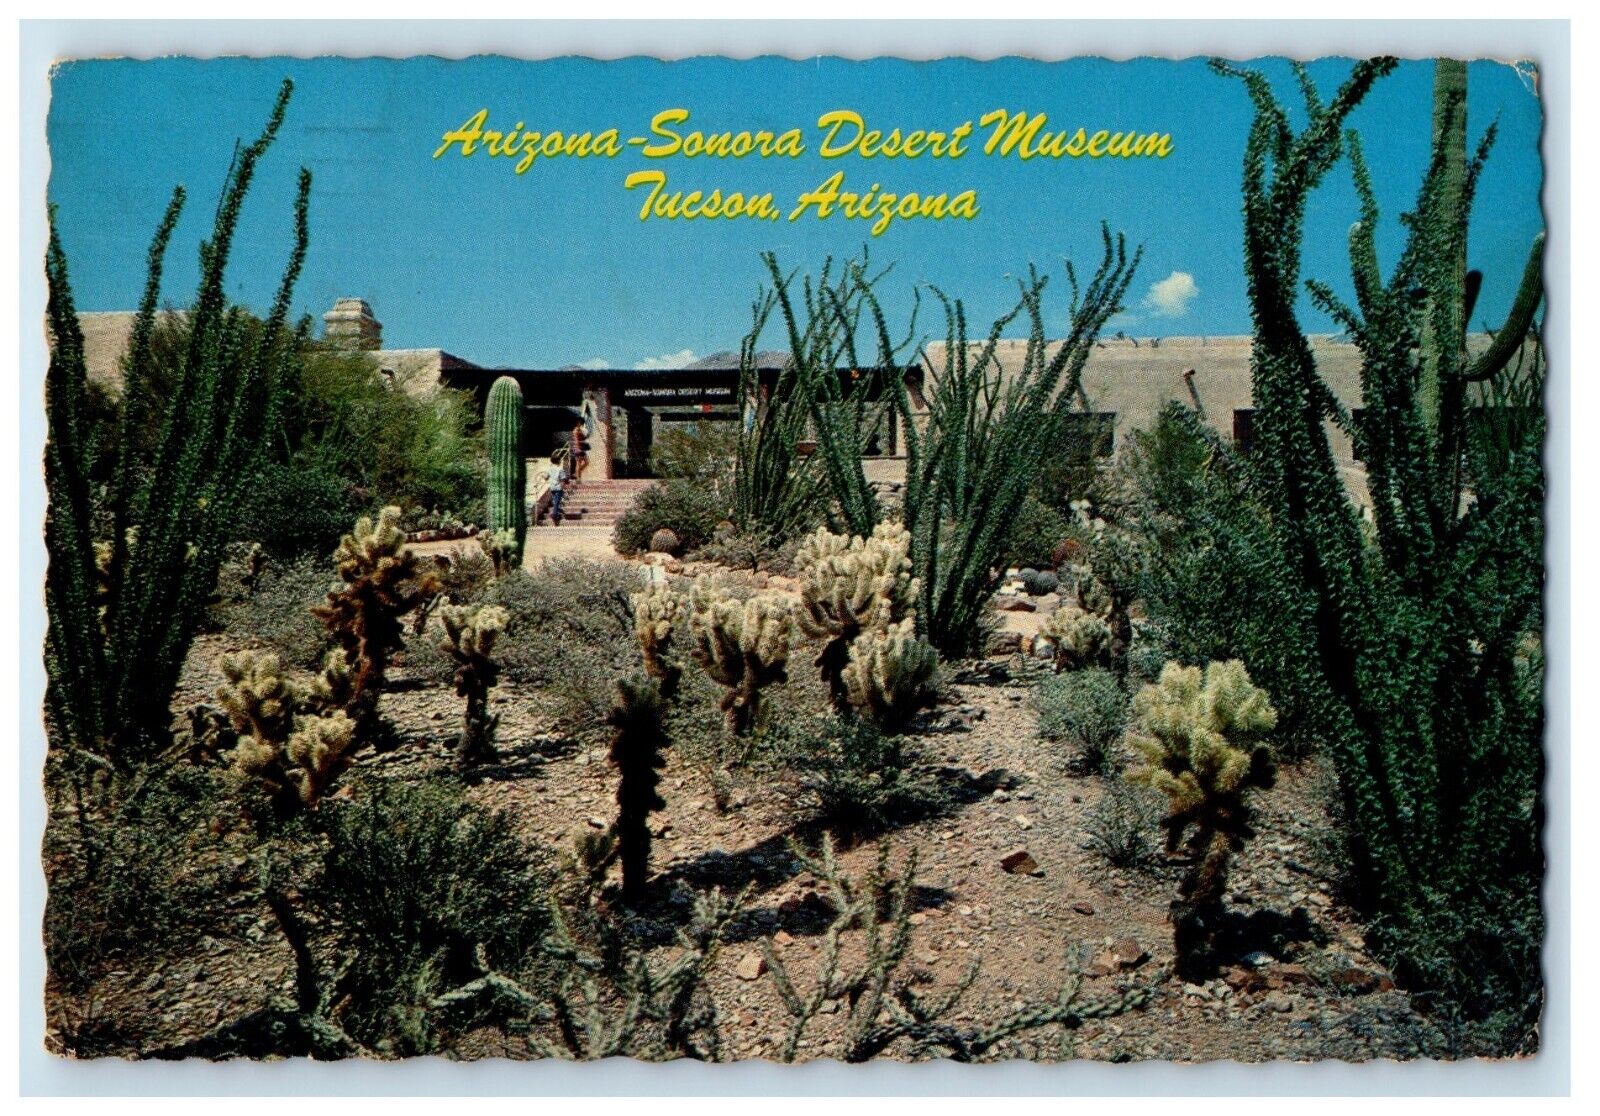 1973 Arizona Sonora Desert Museum Tucson Arizona AZ Posted Vintage Postcard